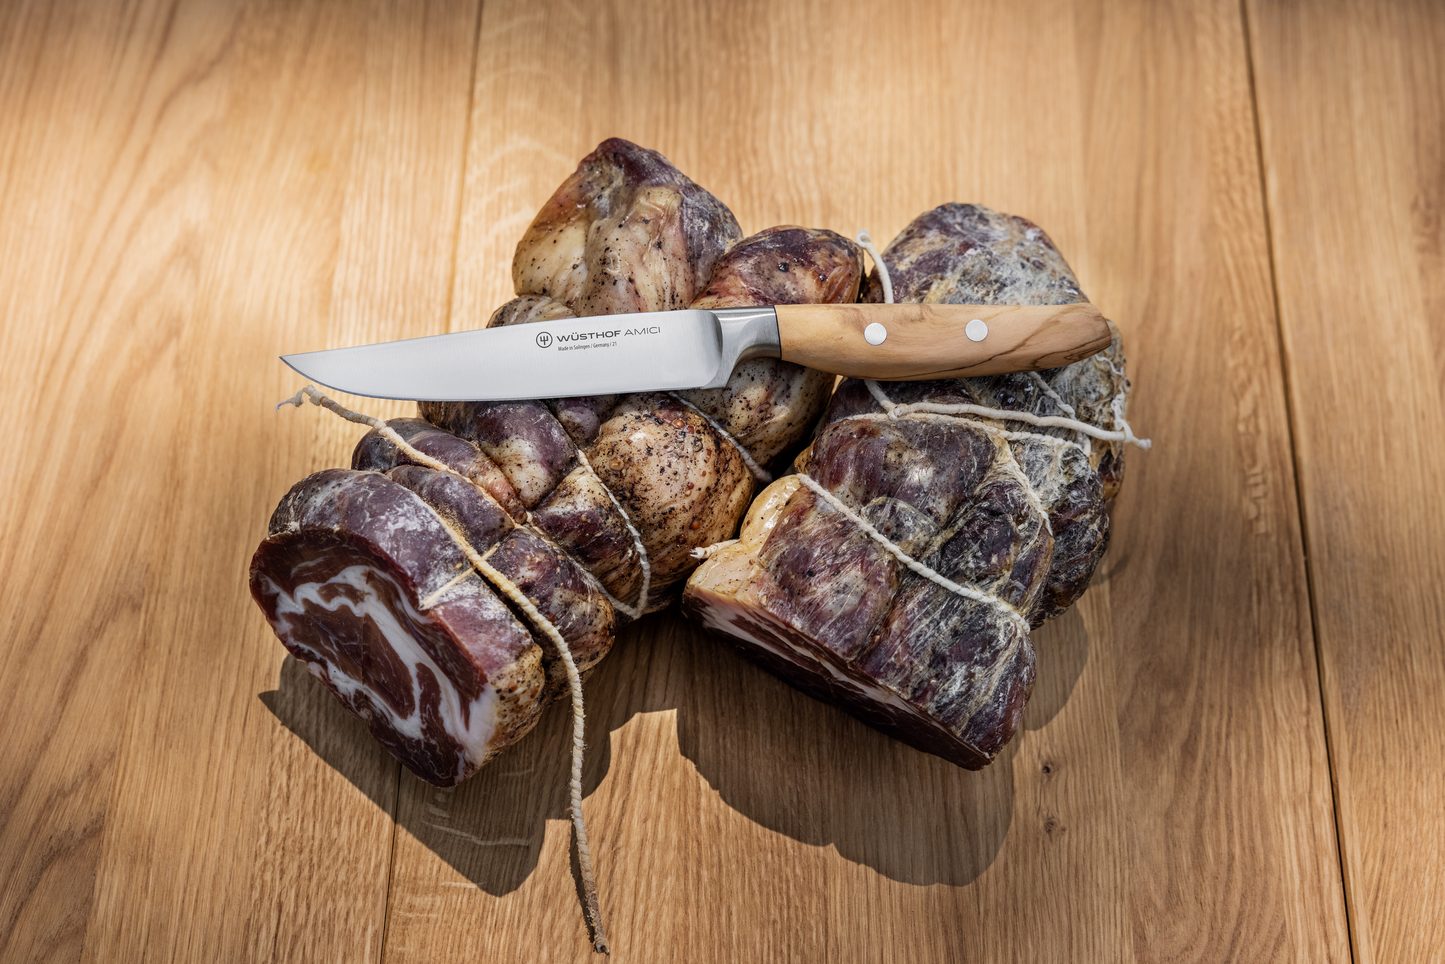 Amici Steak Knife Set 12 cm | 4 1/2 inch